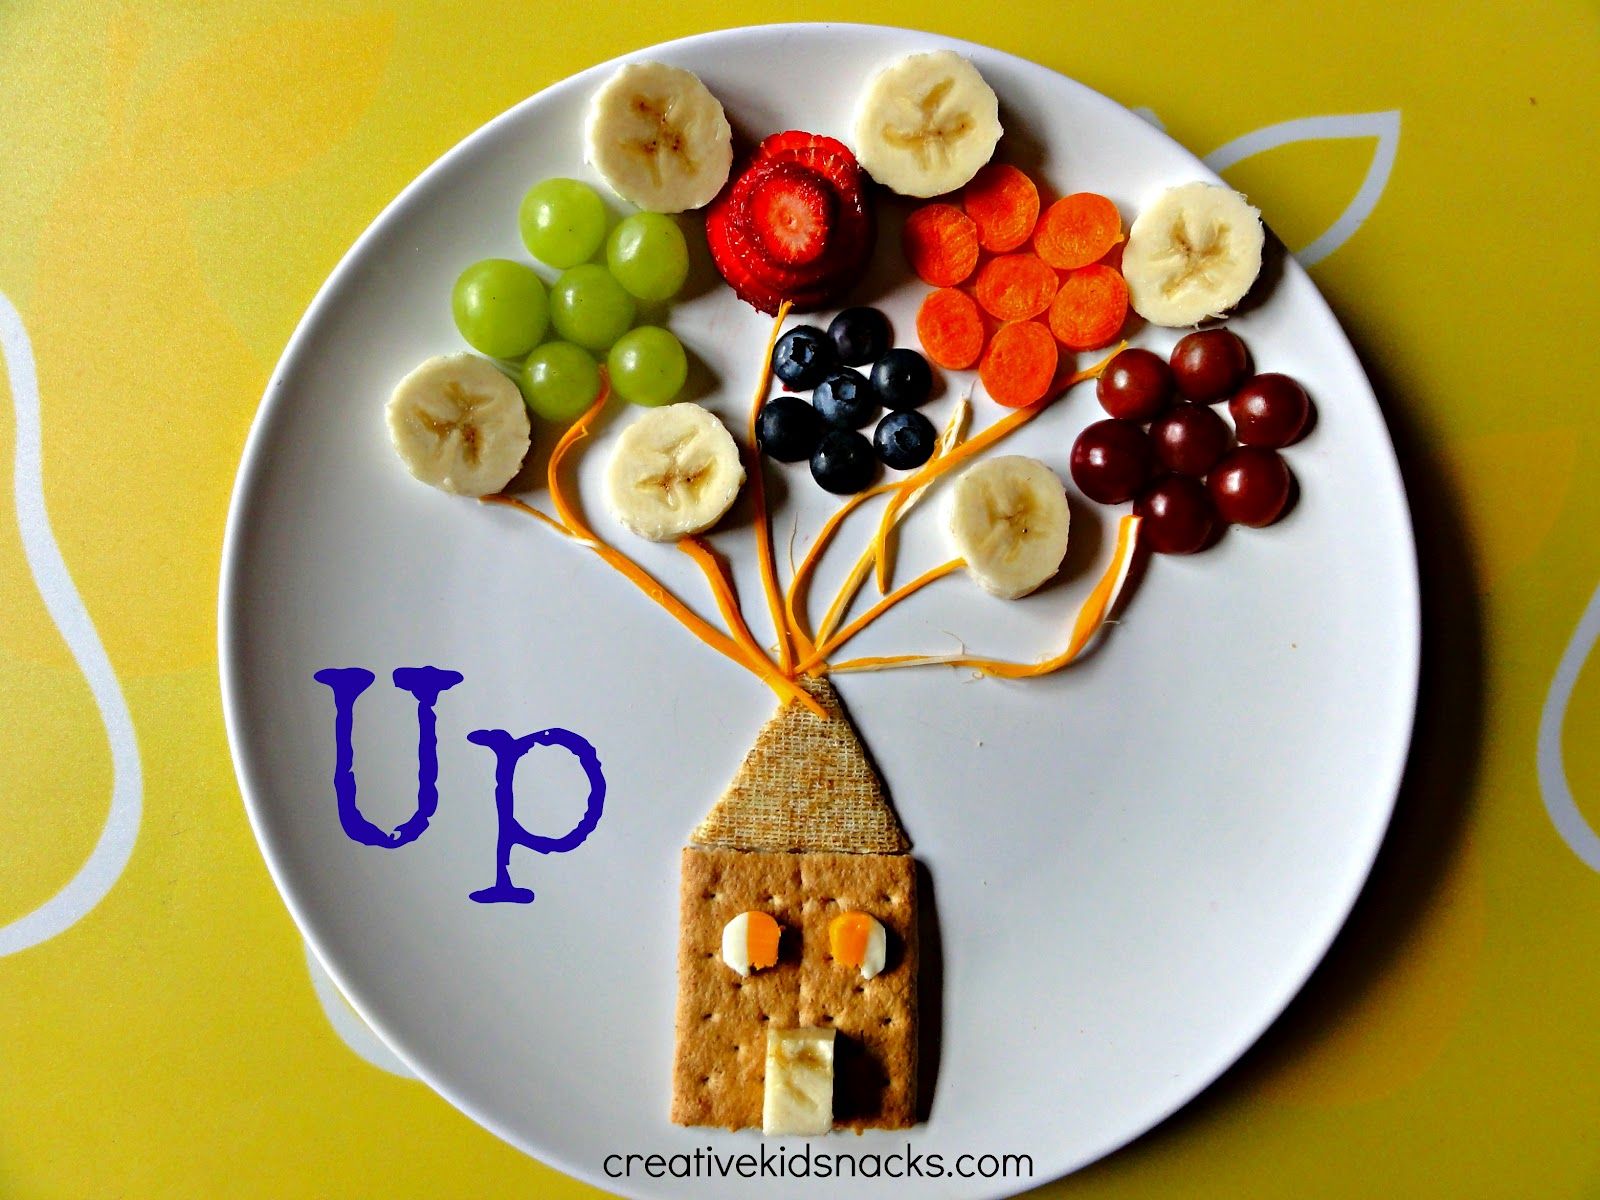 Creative Kid Snacks: Disney's "Up" Lunch